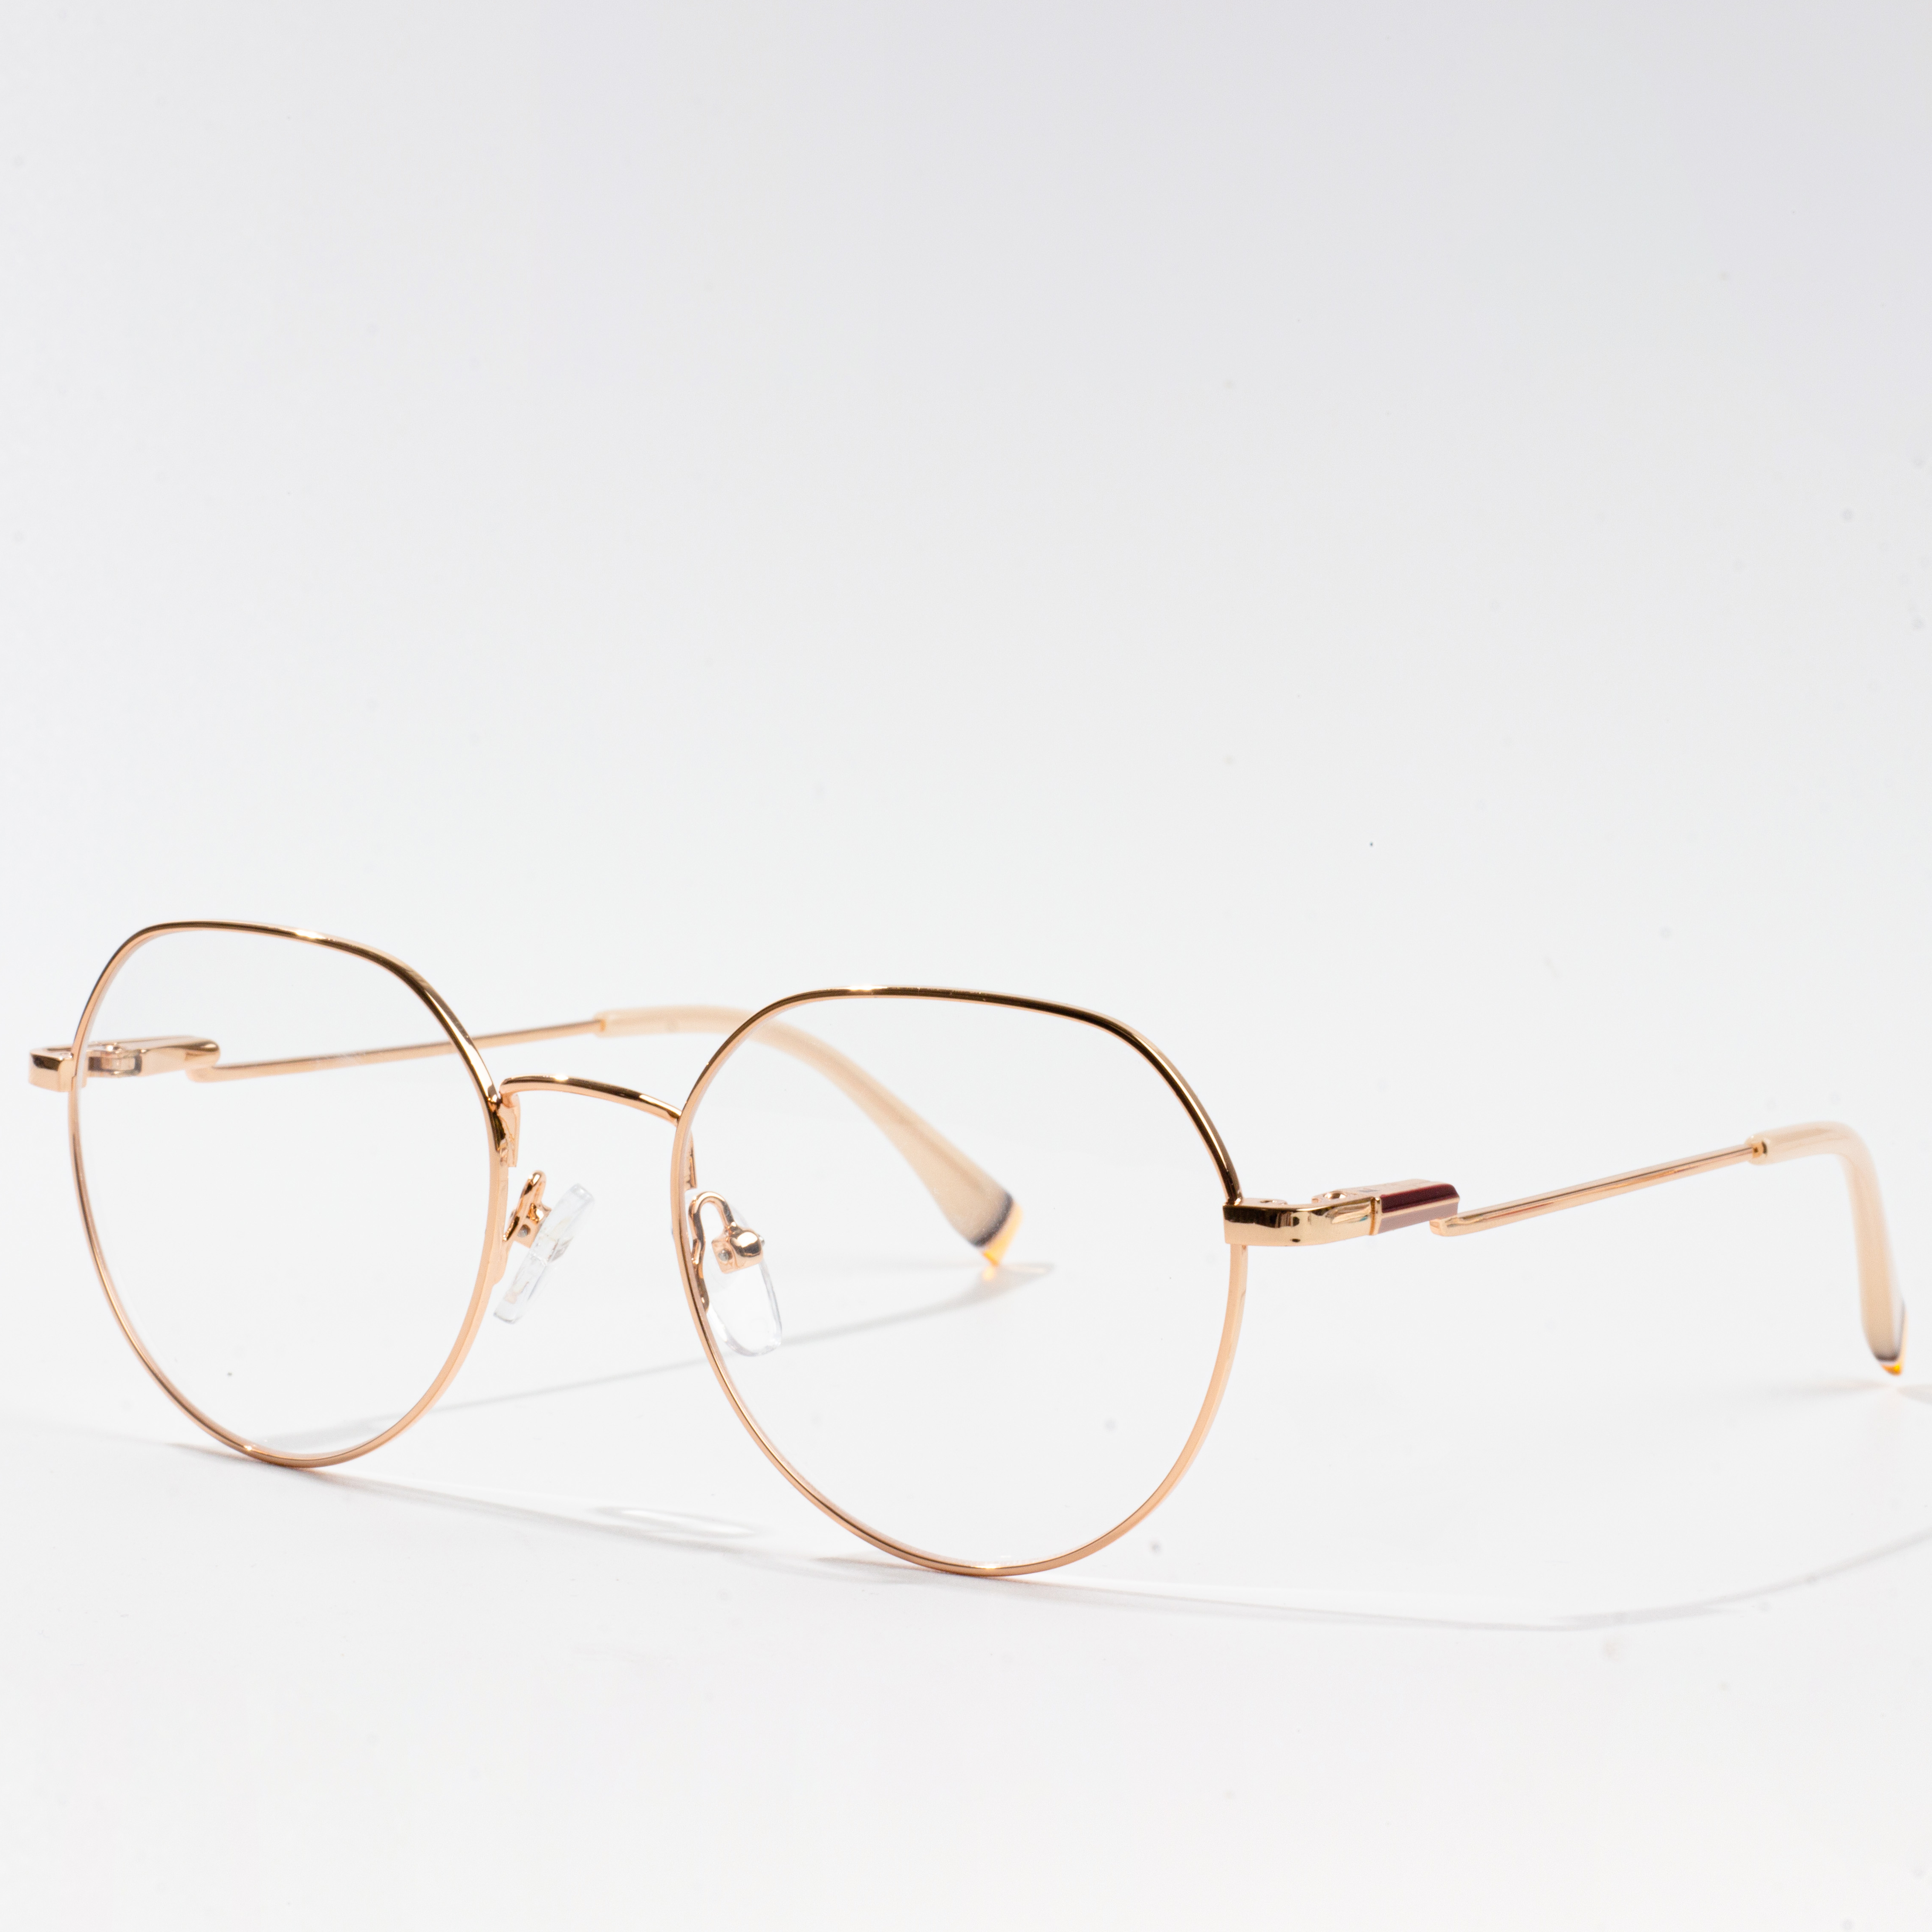 frame kacamata paling populer